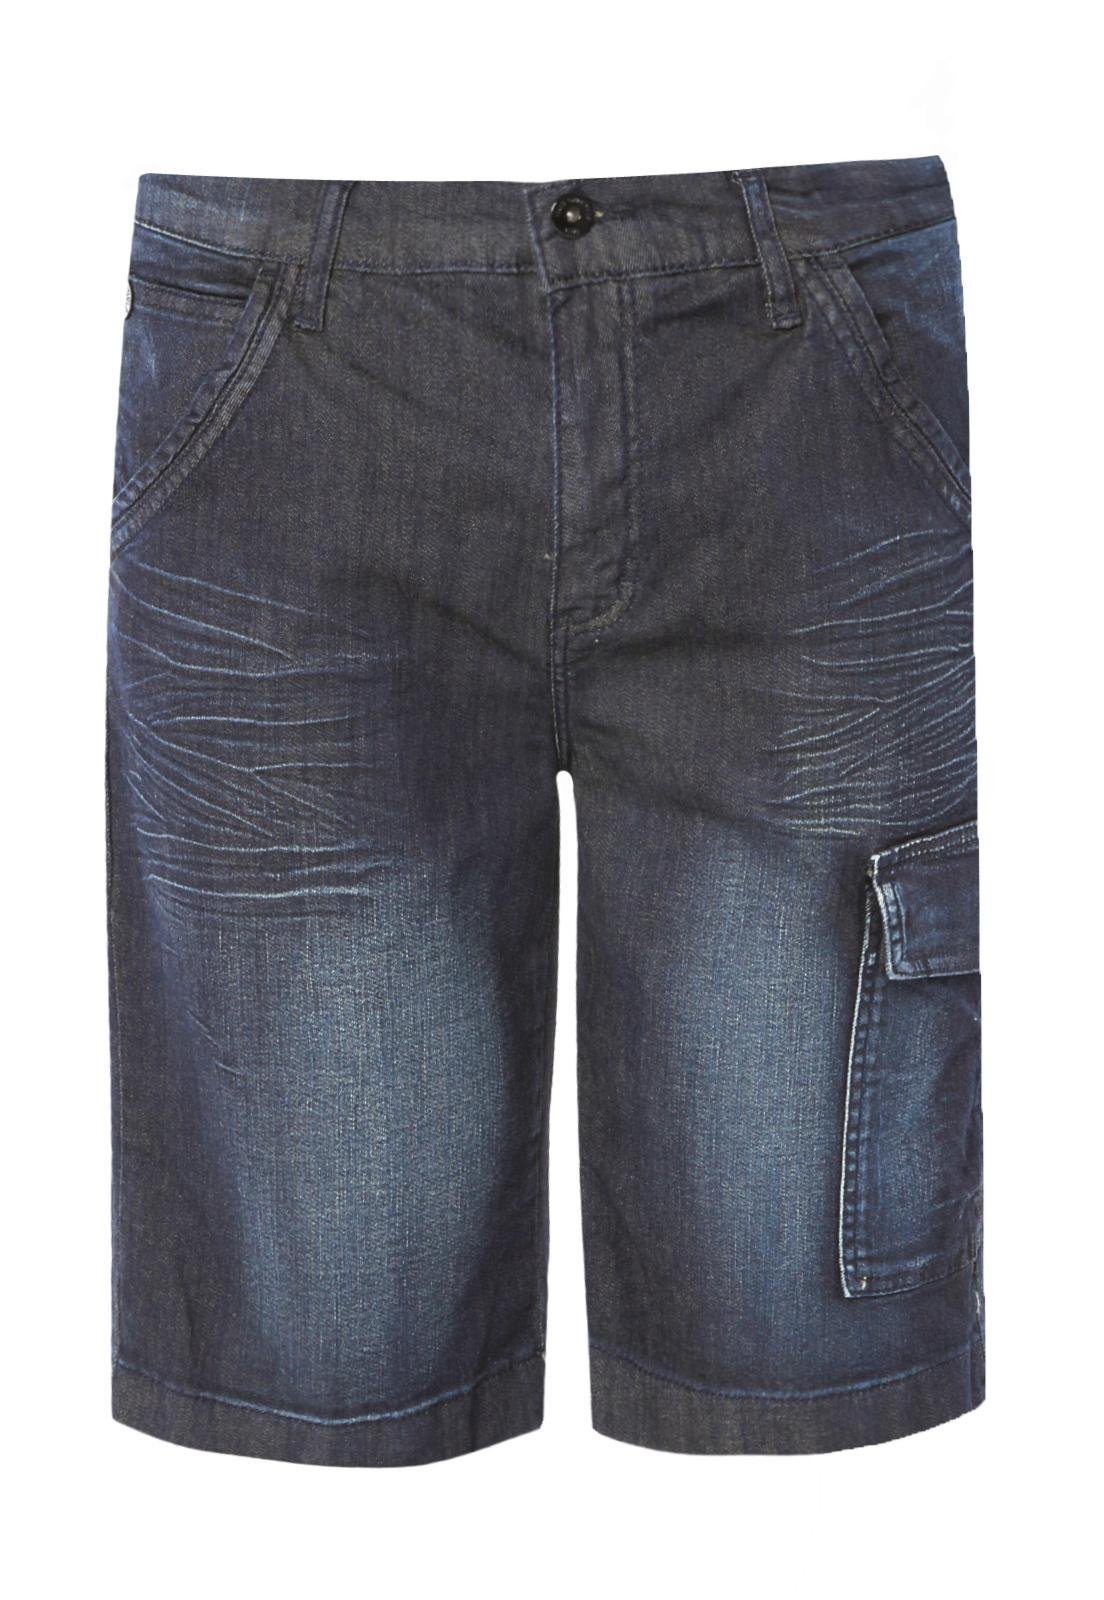 bermuda jeans com bolso lateral